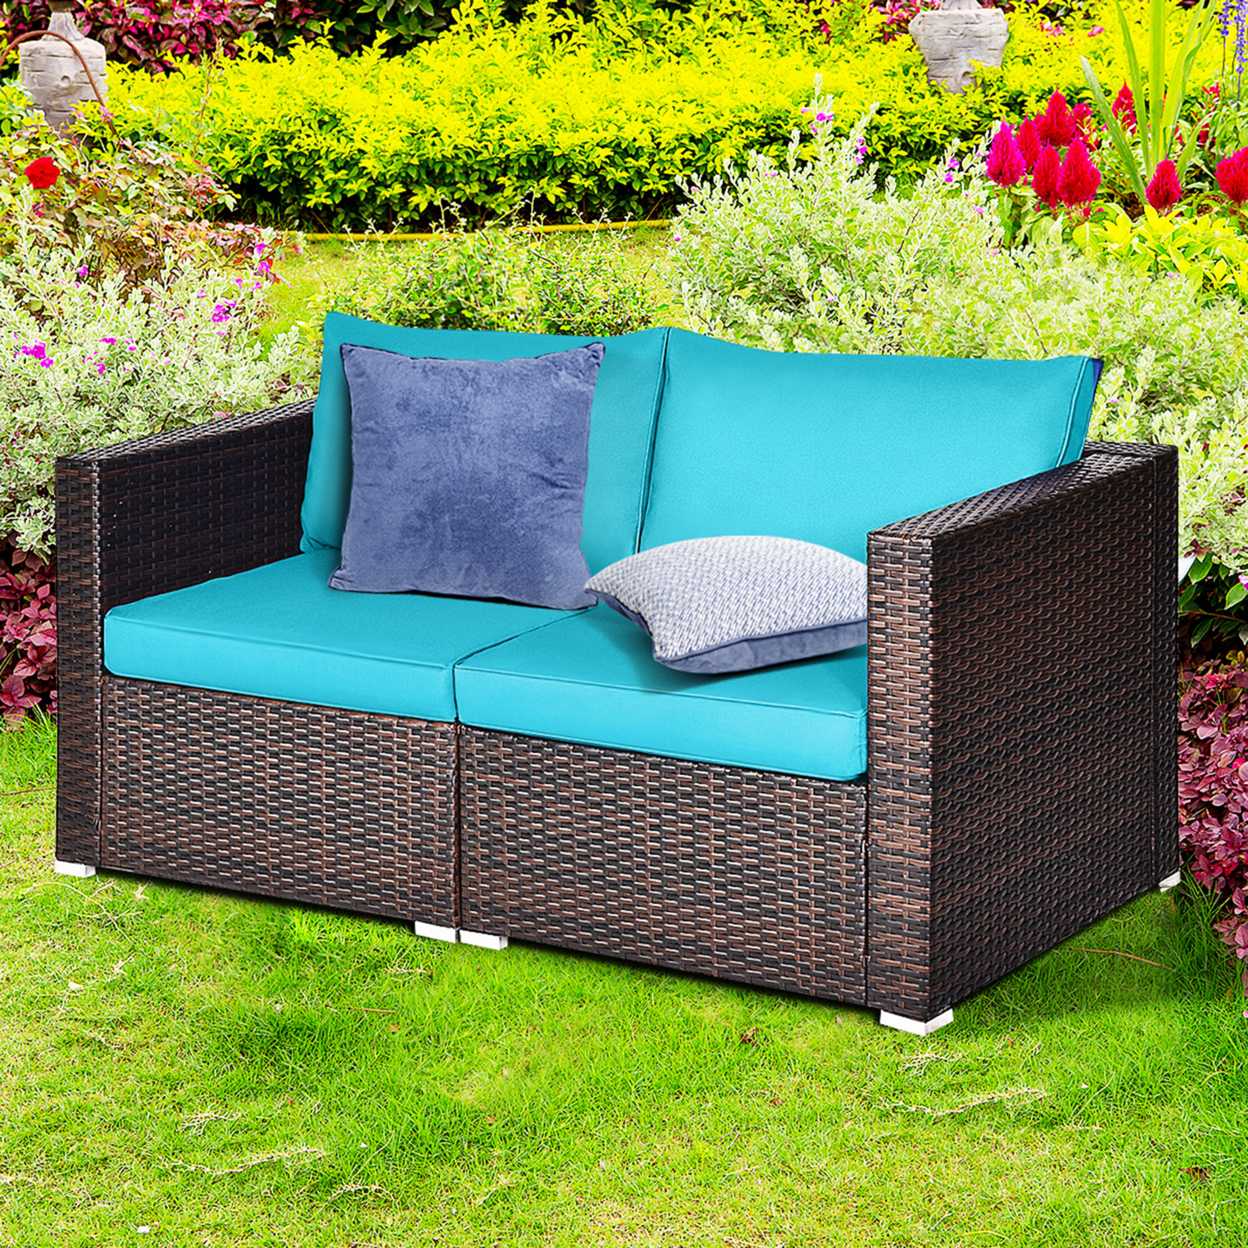 4PCS Rattan Corner Sofa Set Patio Outdoor Furniture Set W/ Blue Cushions